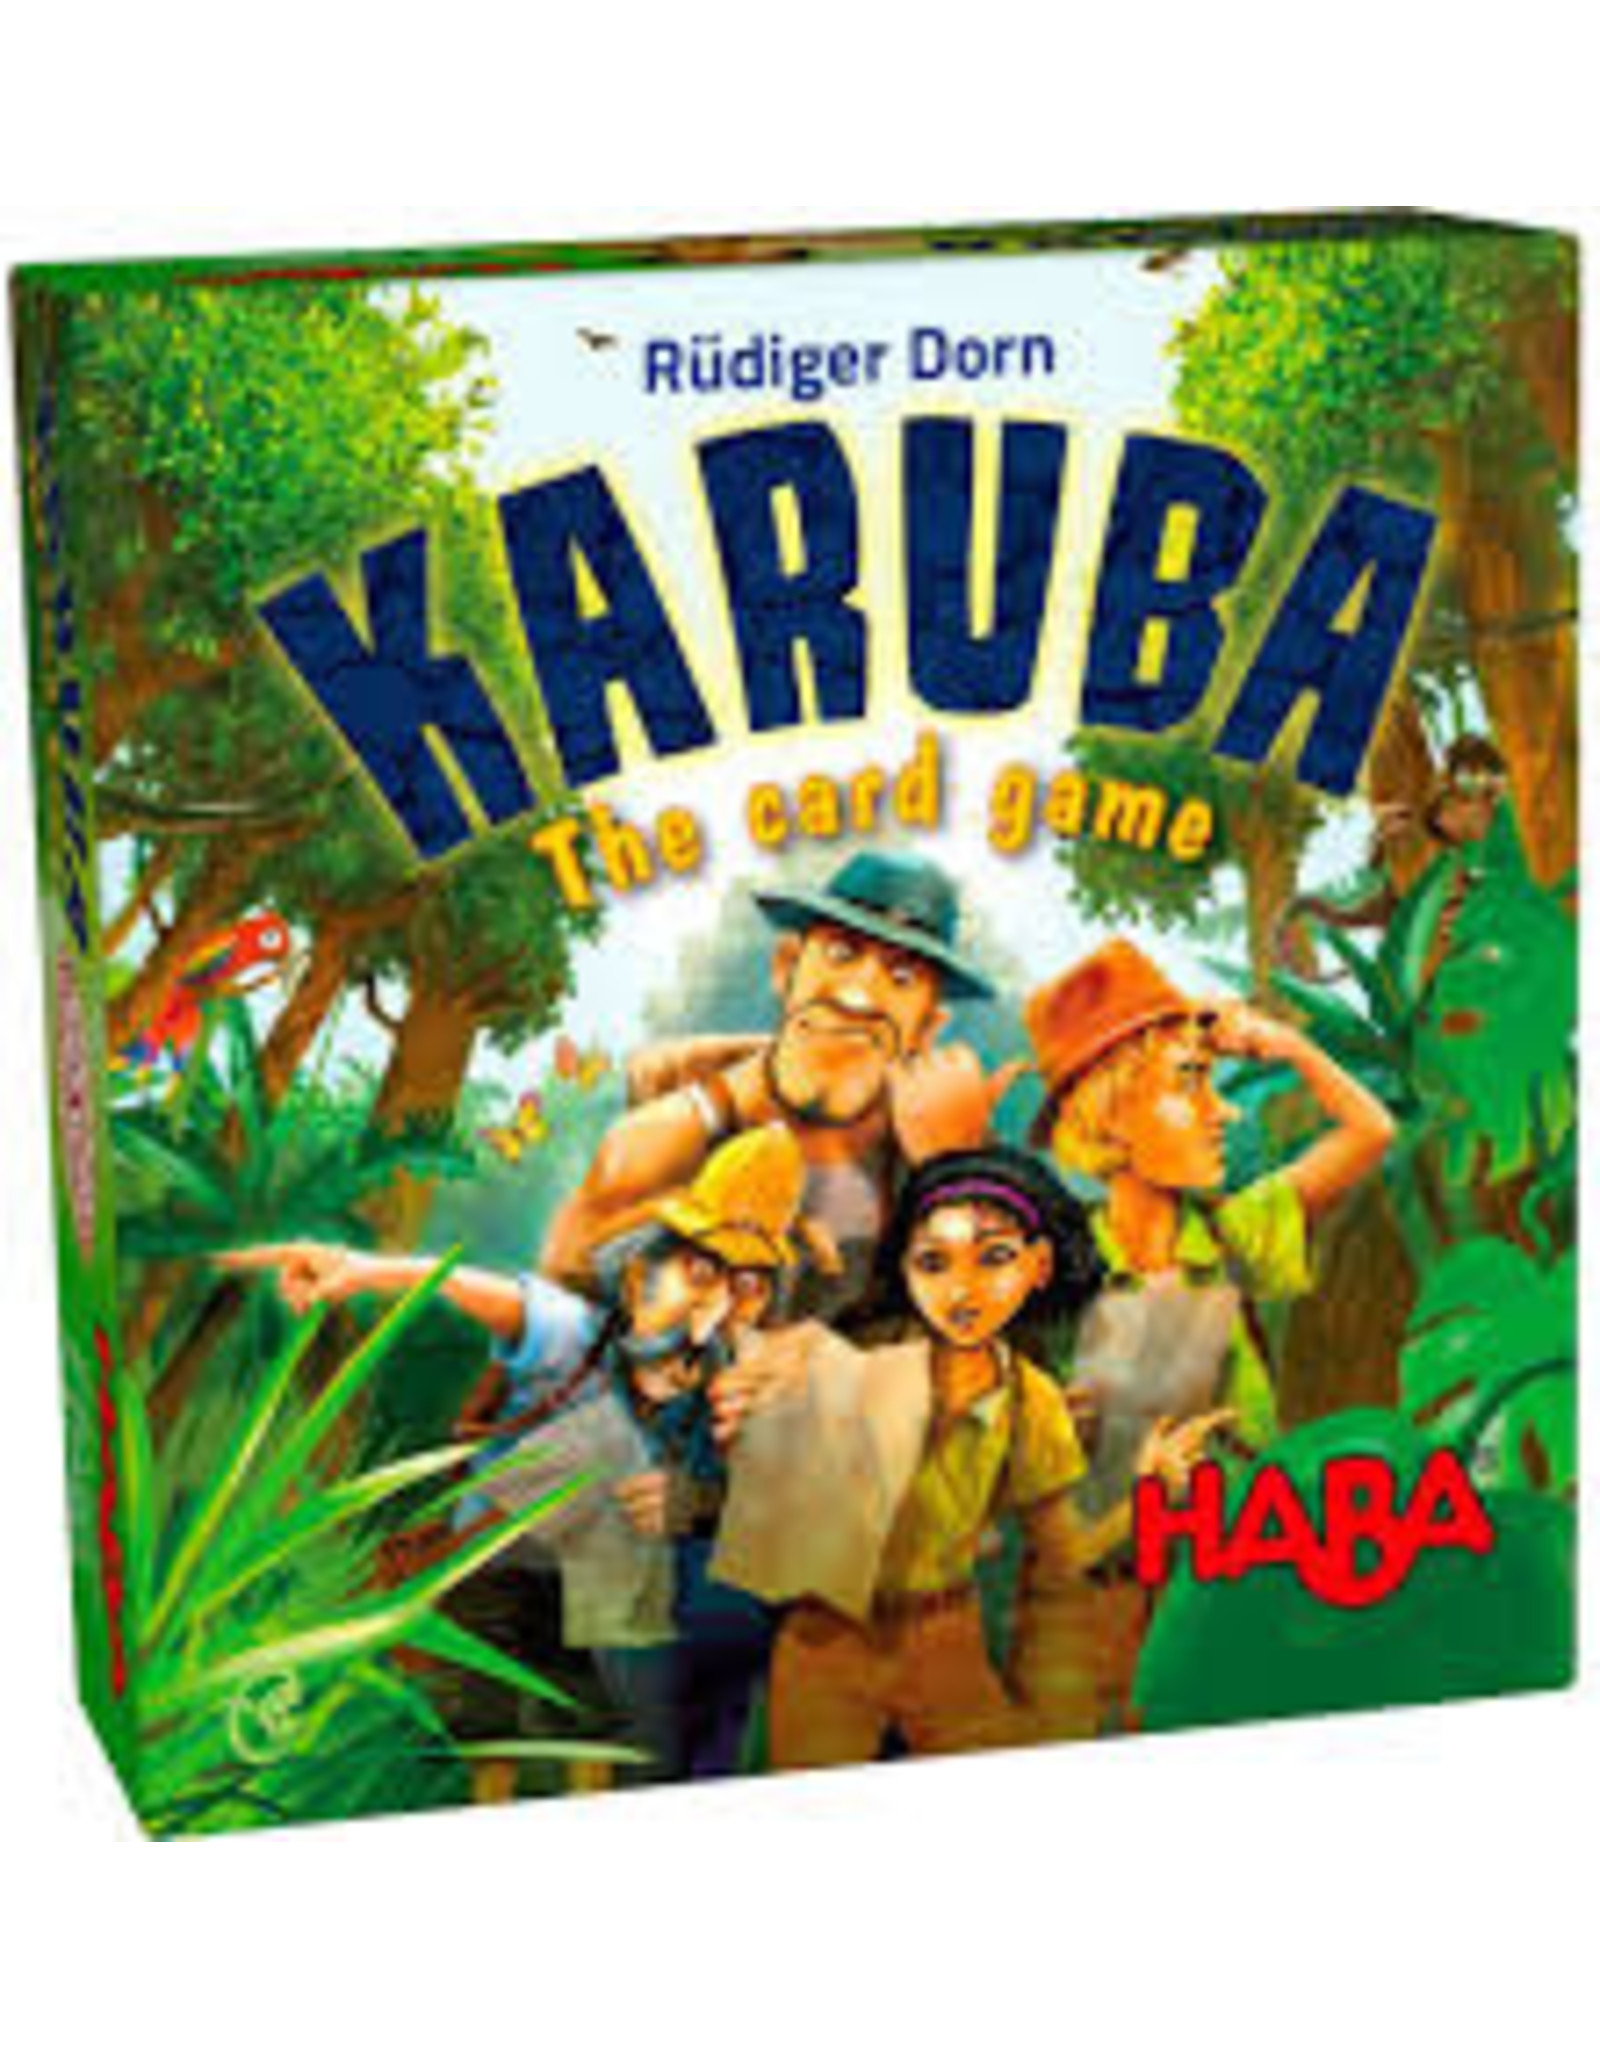 Haba Karuba The Card Game